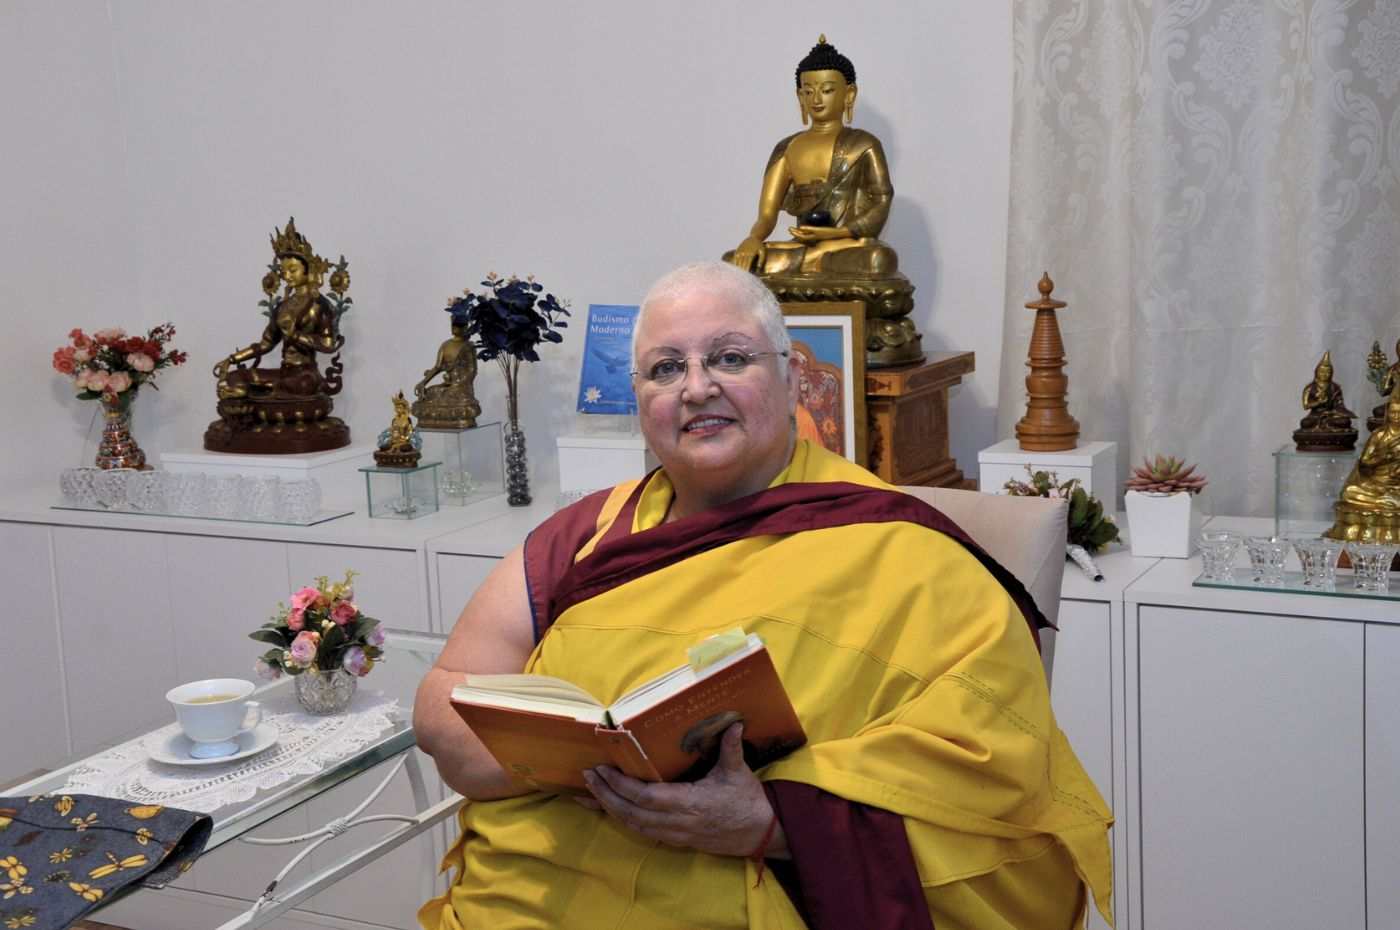 Monja budista Gen Kelsang Chime